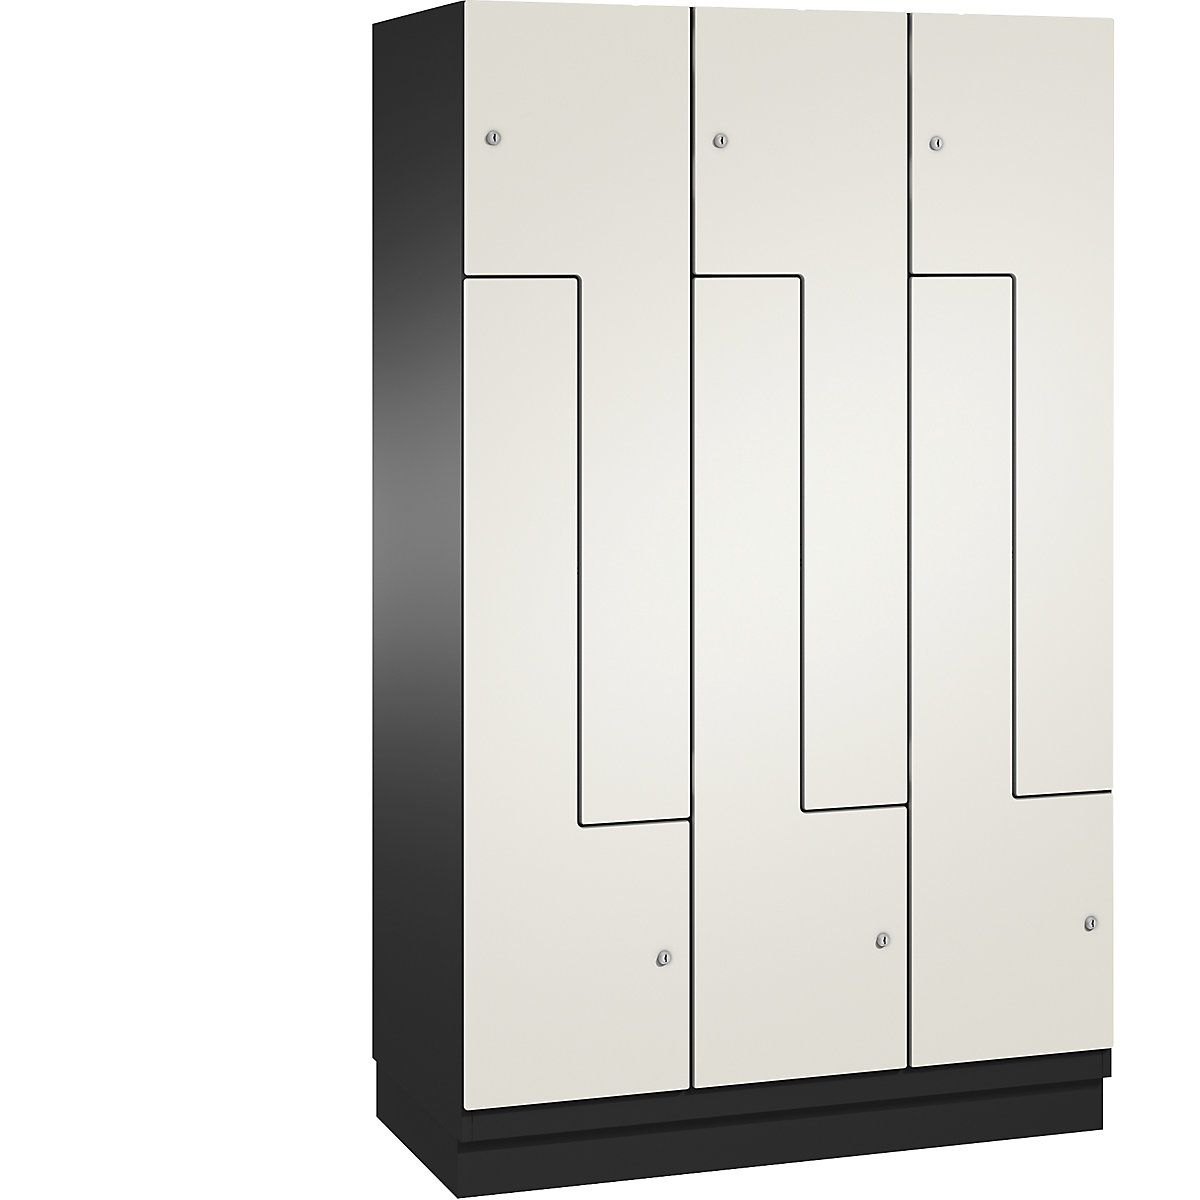 CAMBIO Z cloakroom locker unit – C+P